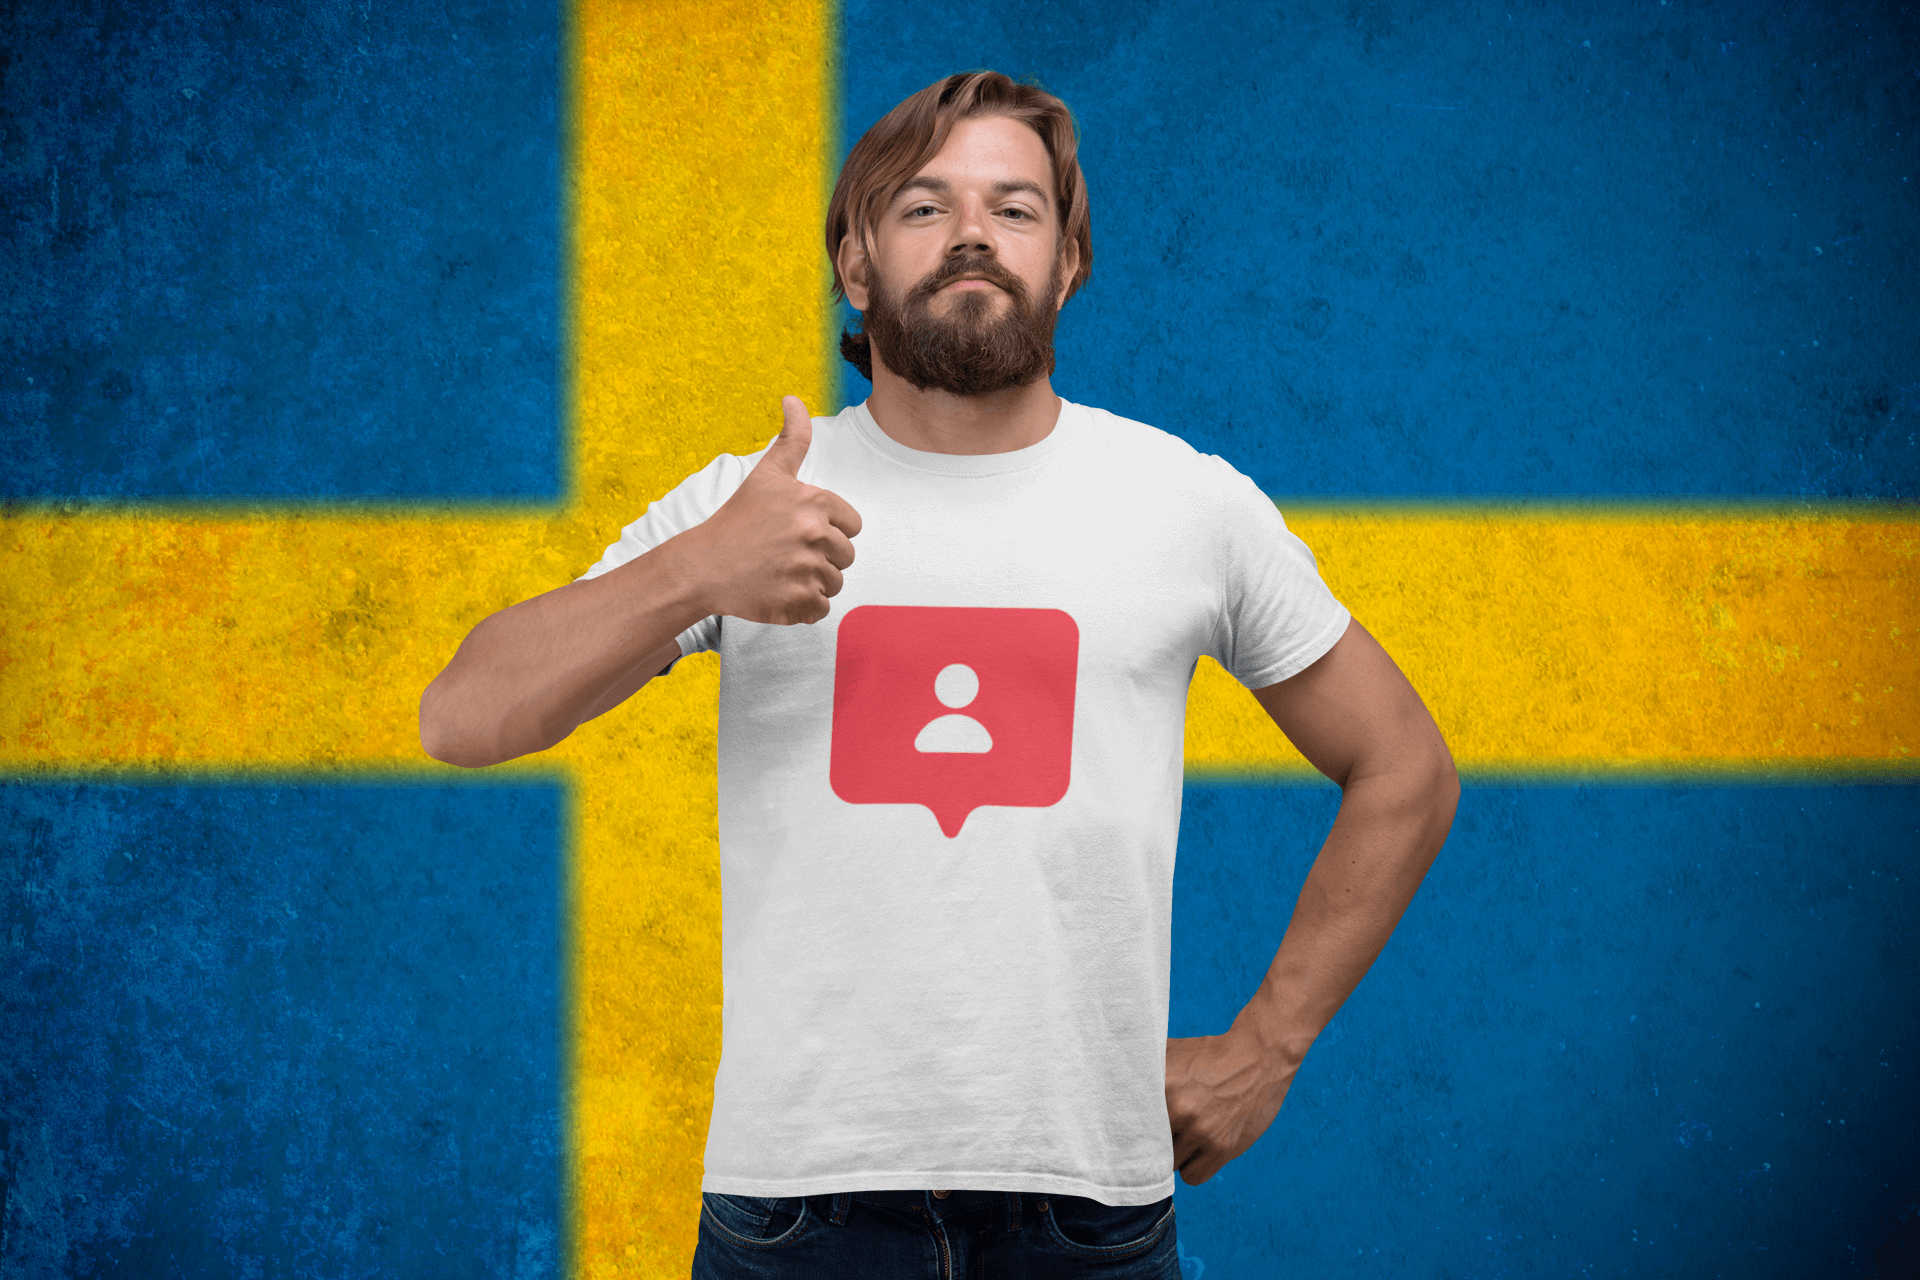 buy premium instagram followers from Sweden